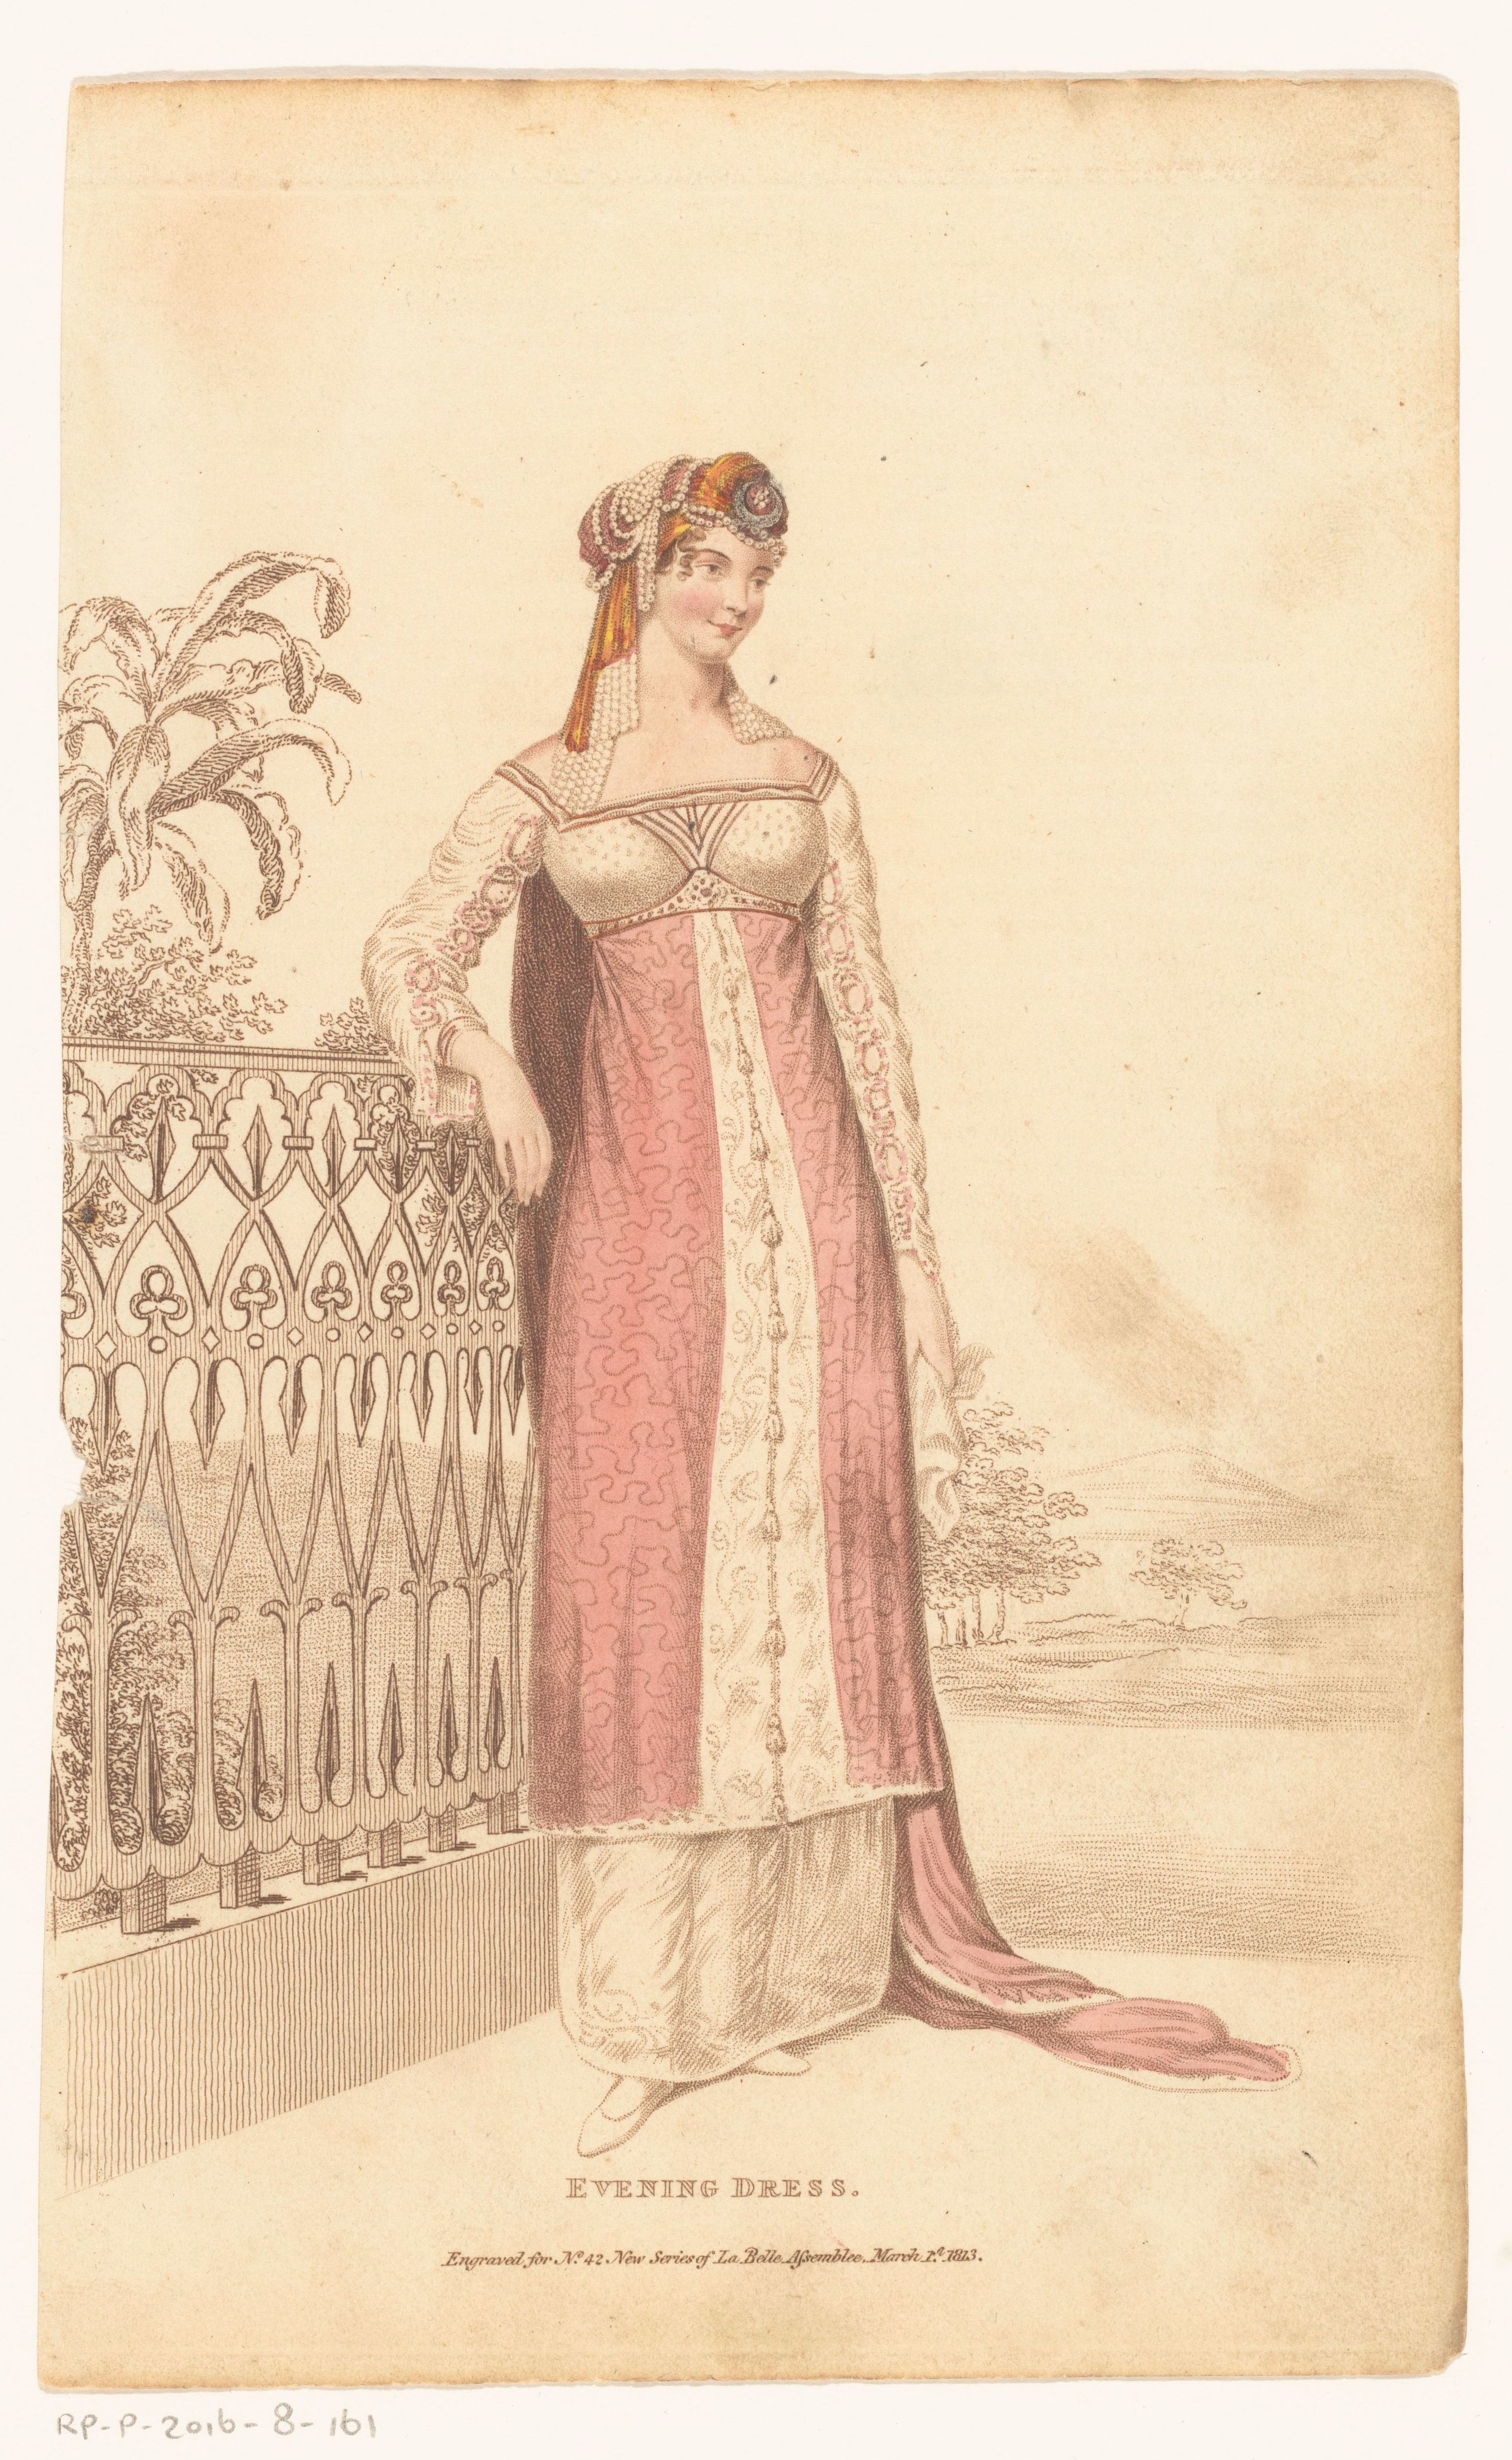 ik ga akkoord met speer interferentie File:La Belle Assemblee, March 1 1813, No. 42 (New Series) Evening dress,  RP-P-2016-8-161.jpg - Wikimedia Commons